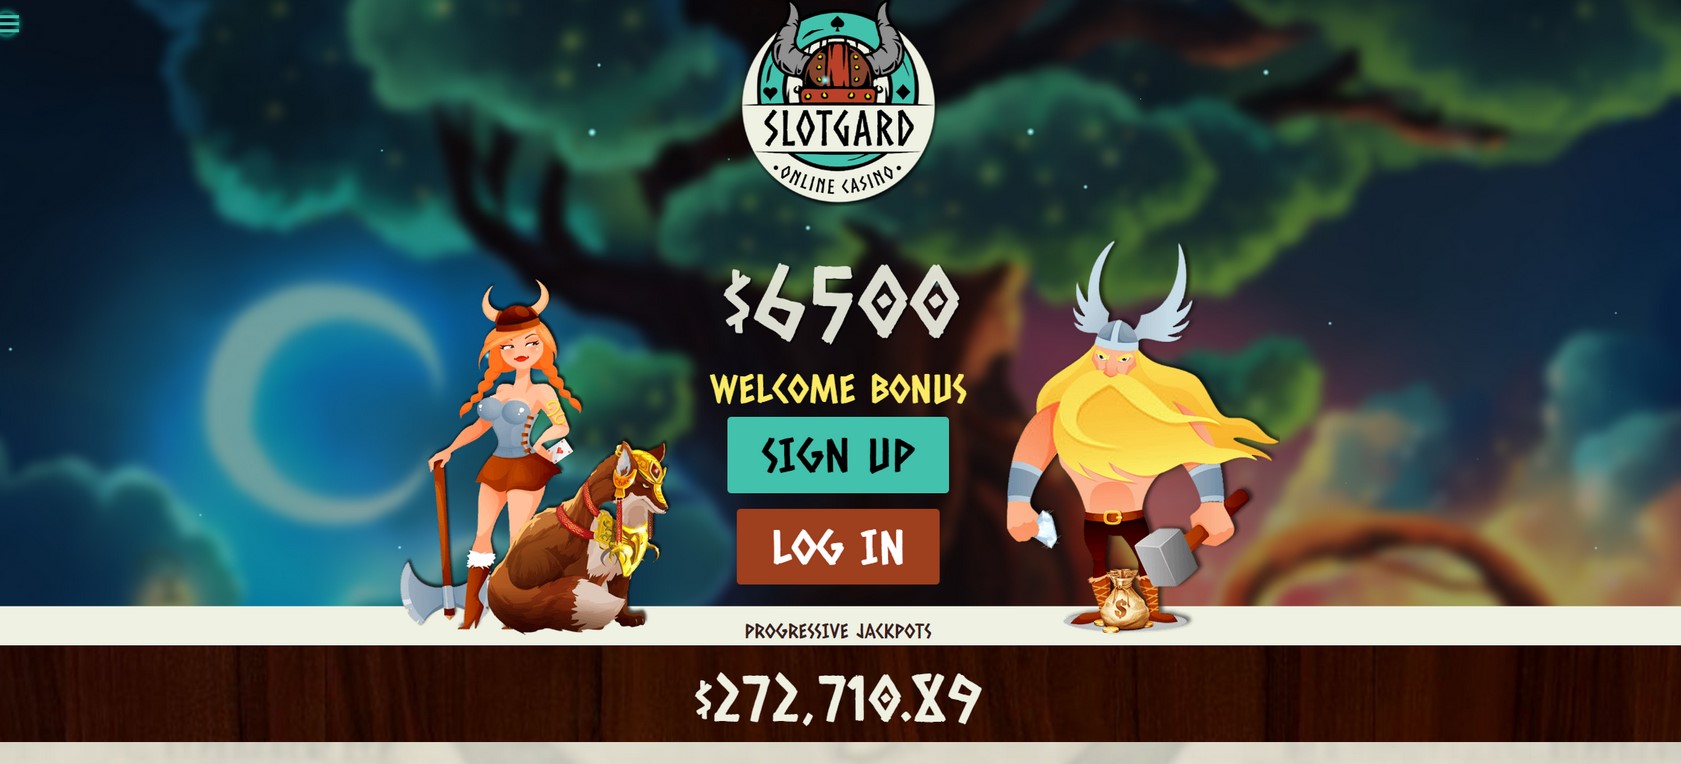 slotgard casino website homepage screenshot